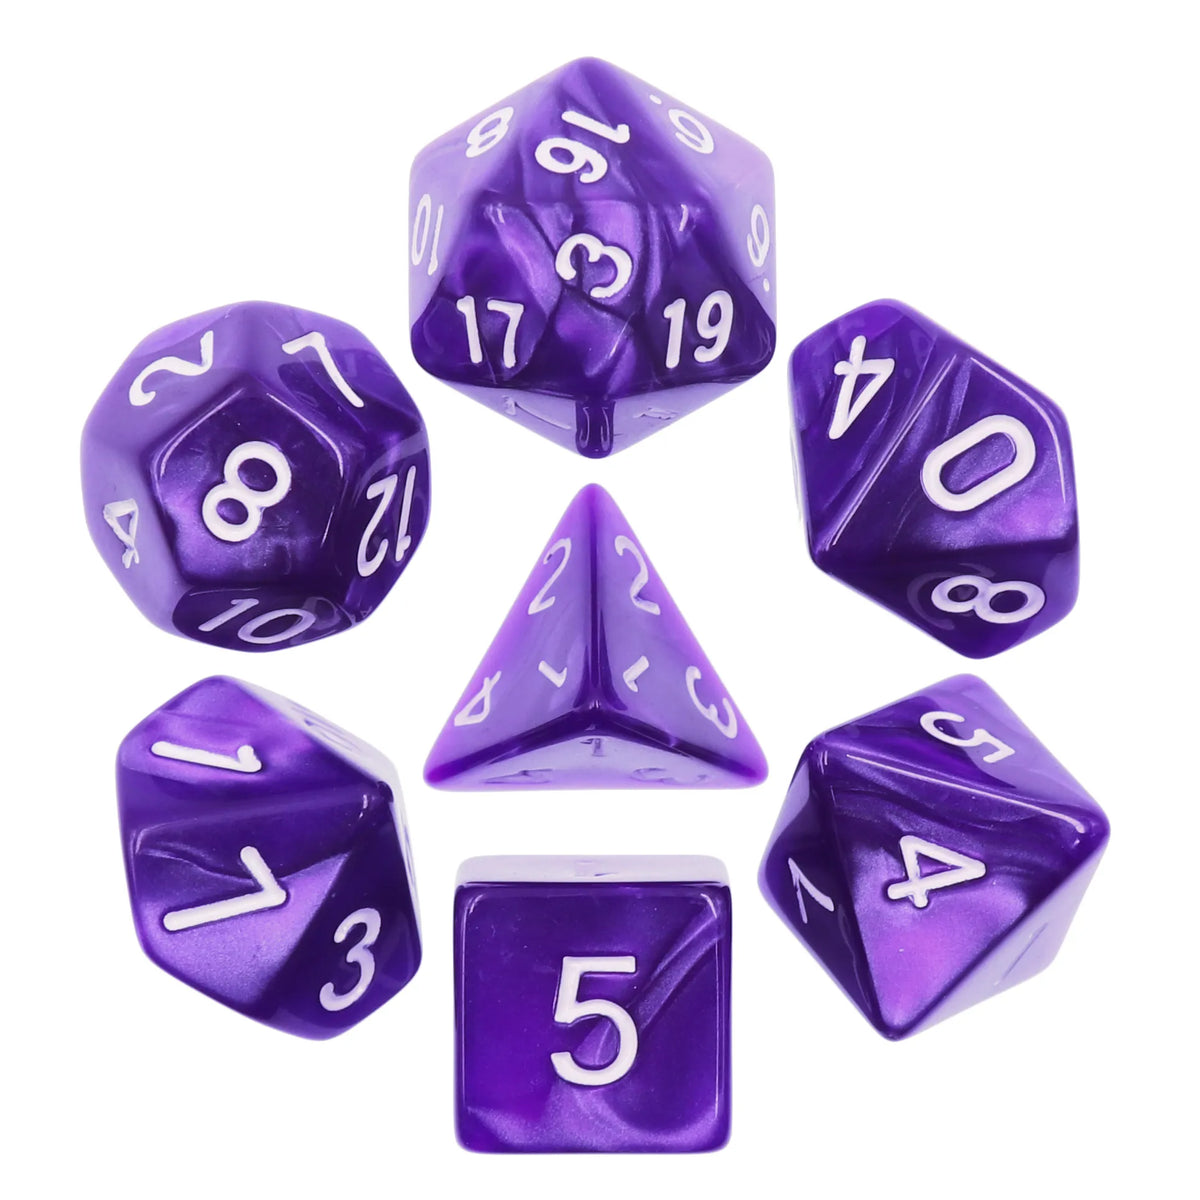 Purple pearl dice set